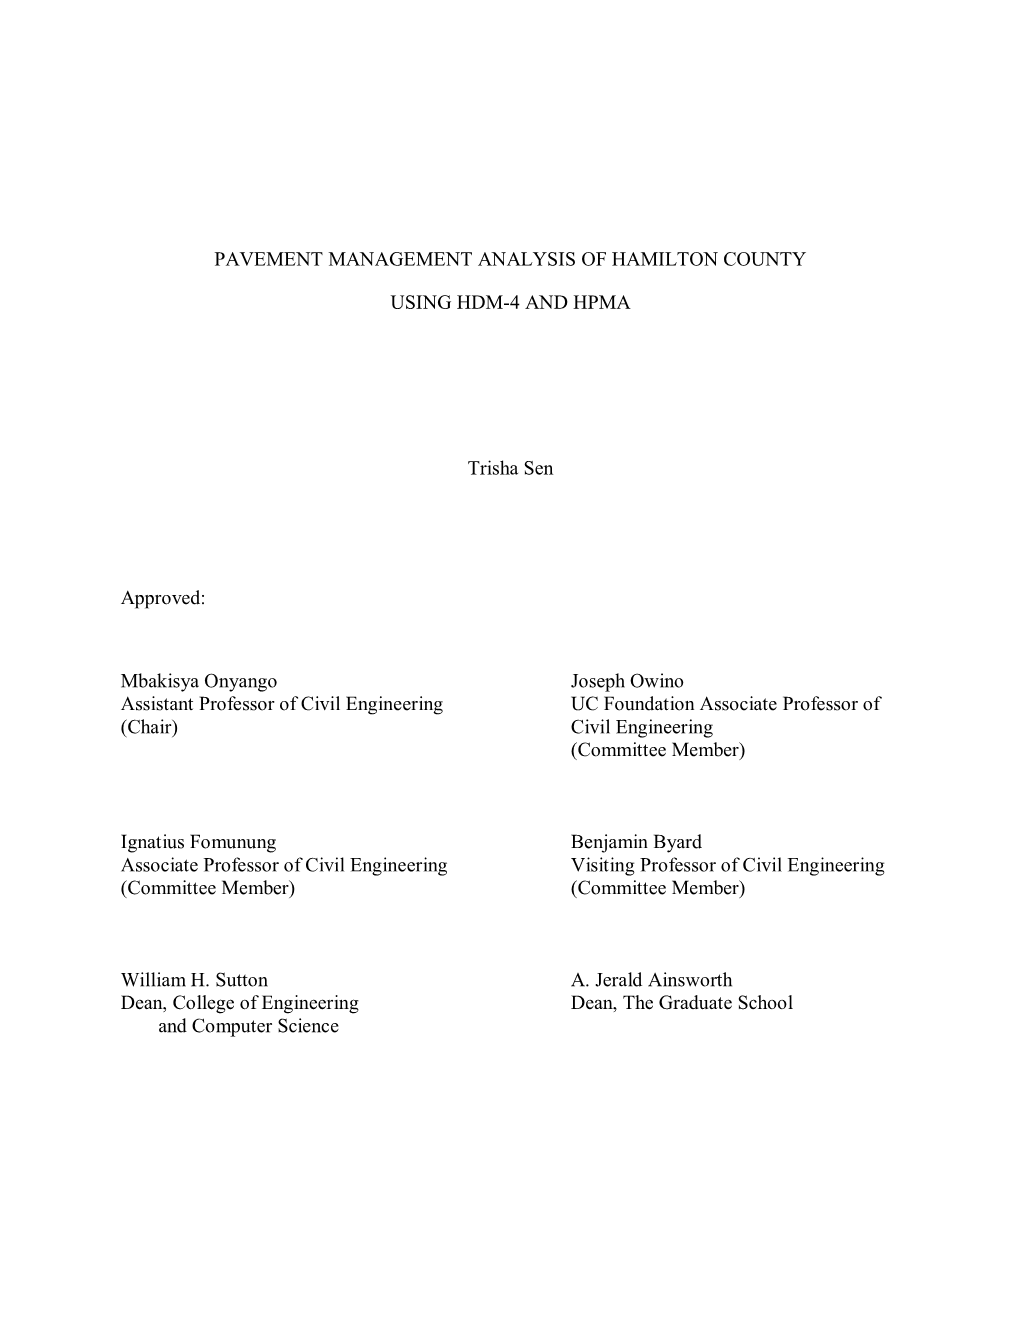 Pavement Management Analysis of Hamilton County Using HDM-4 and HPMA